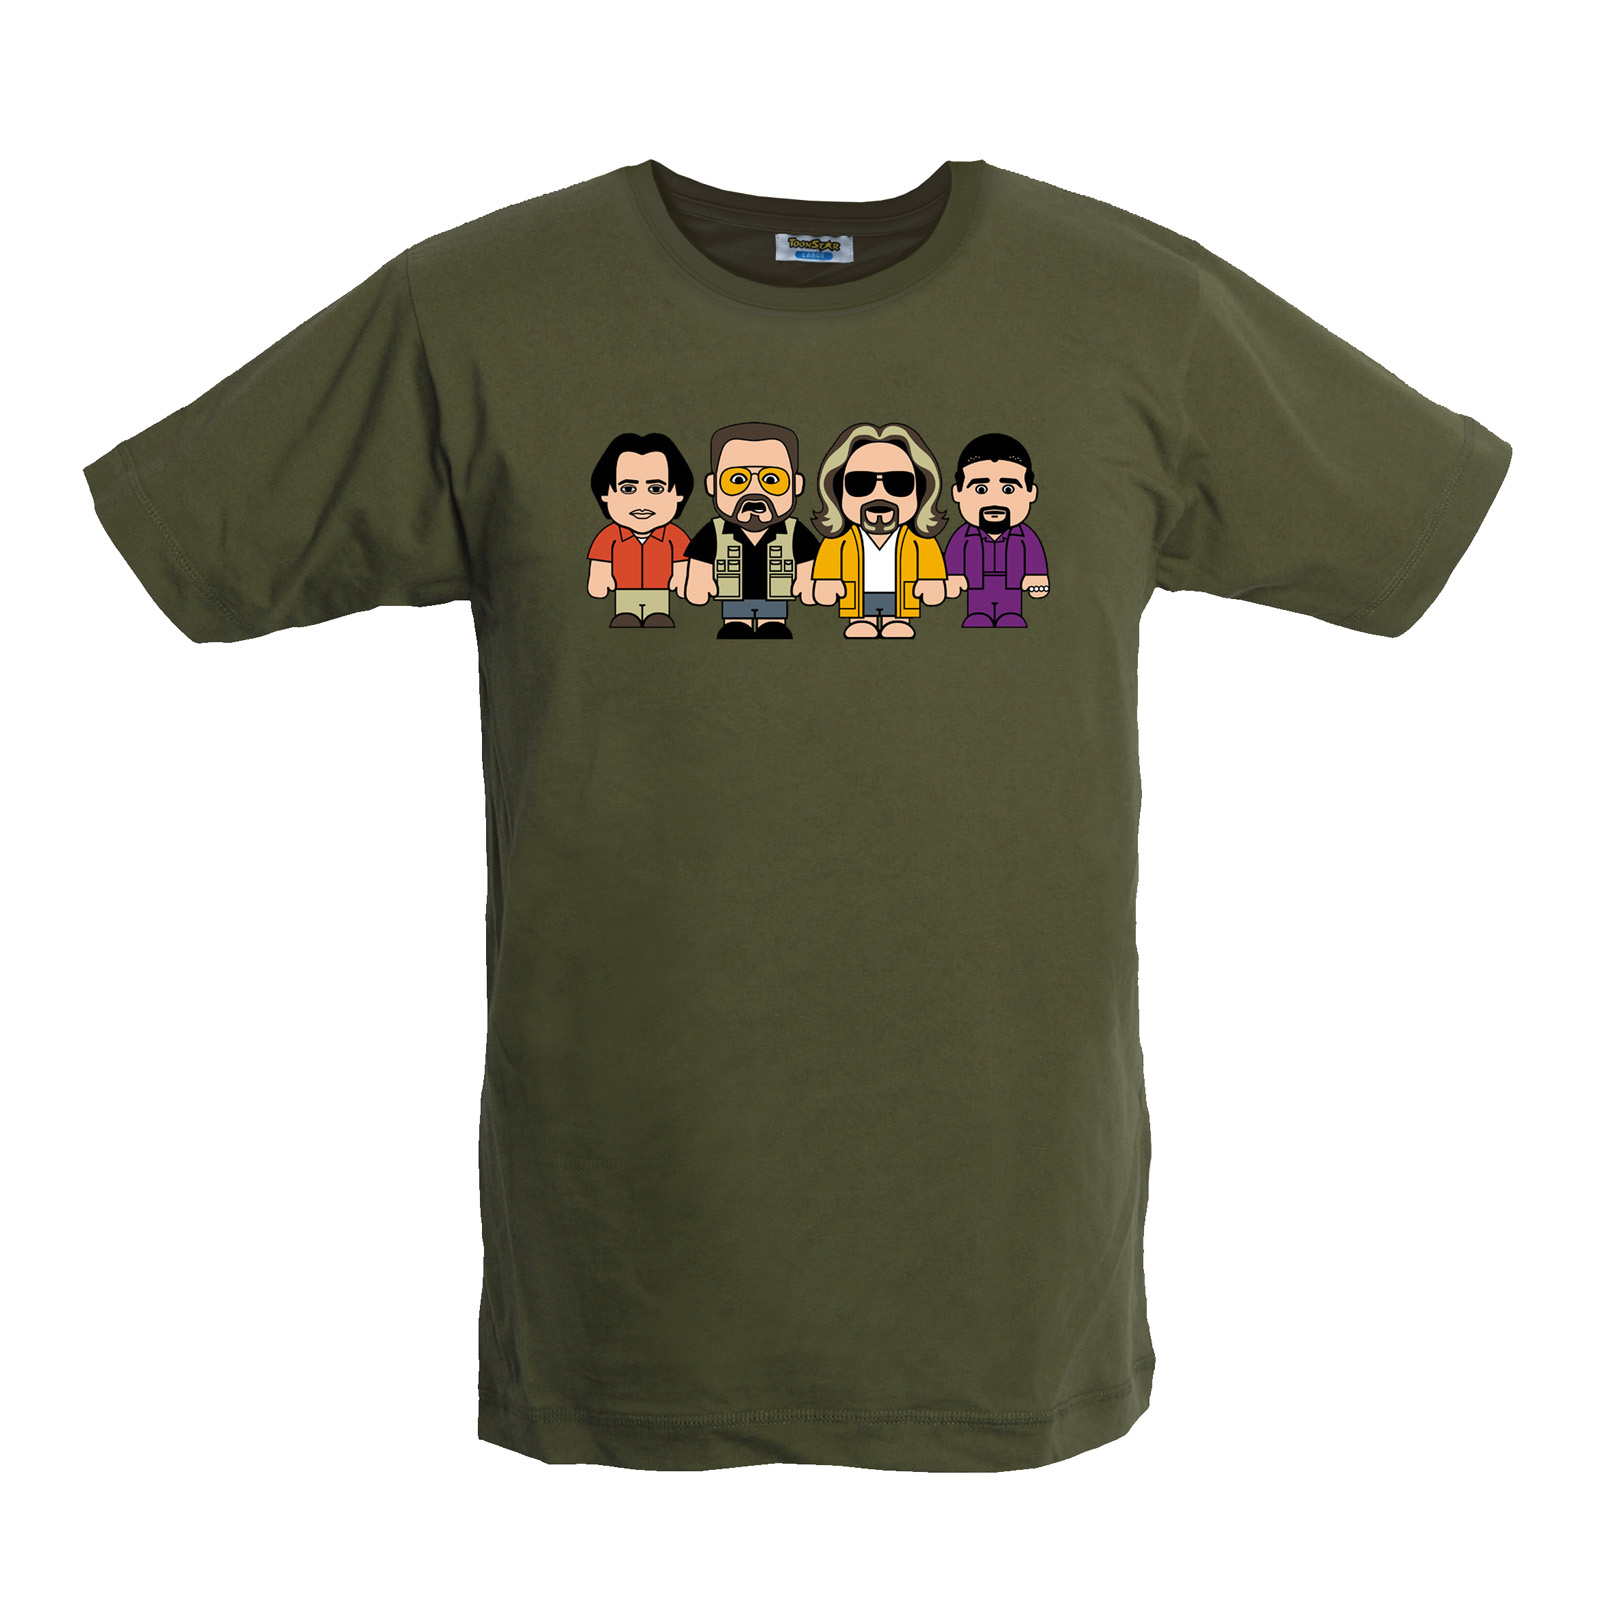 Bowling Team - T-shirt Toonstar